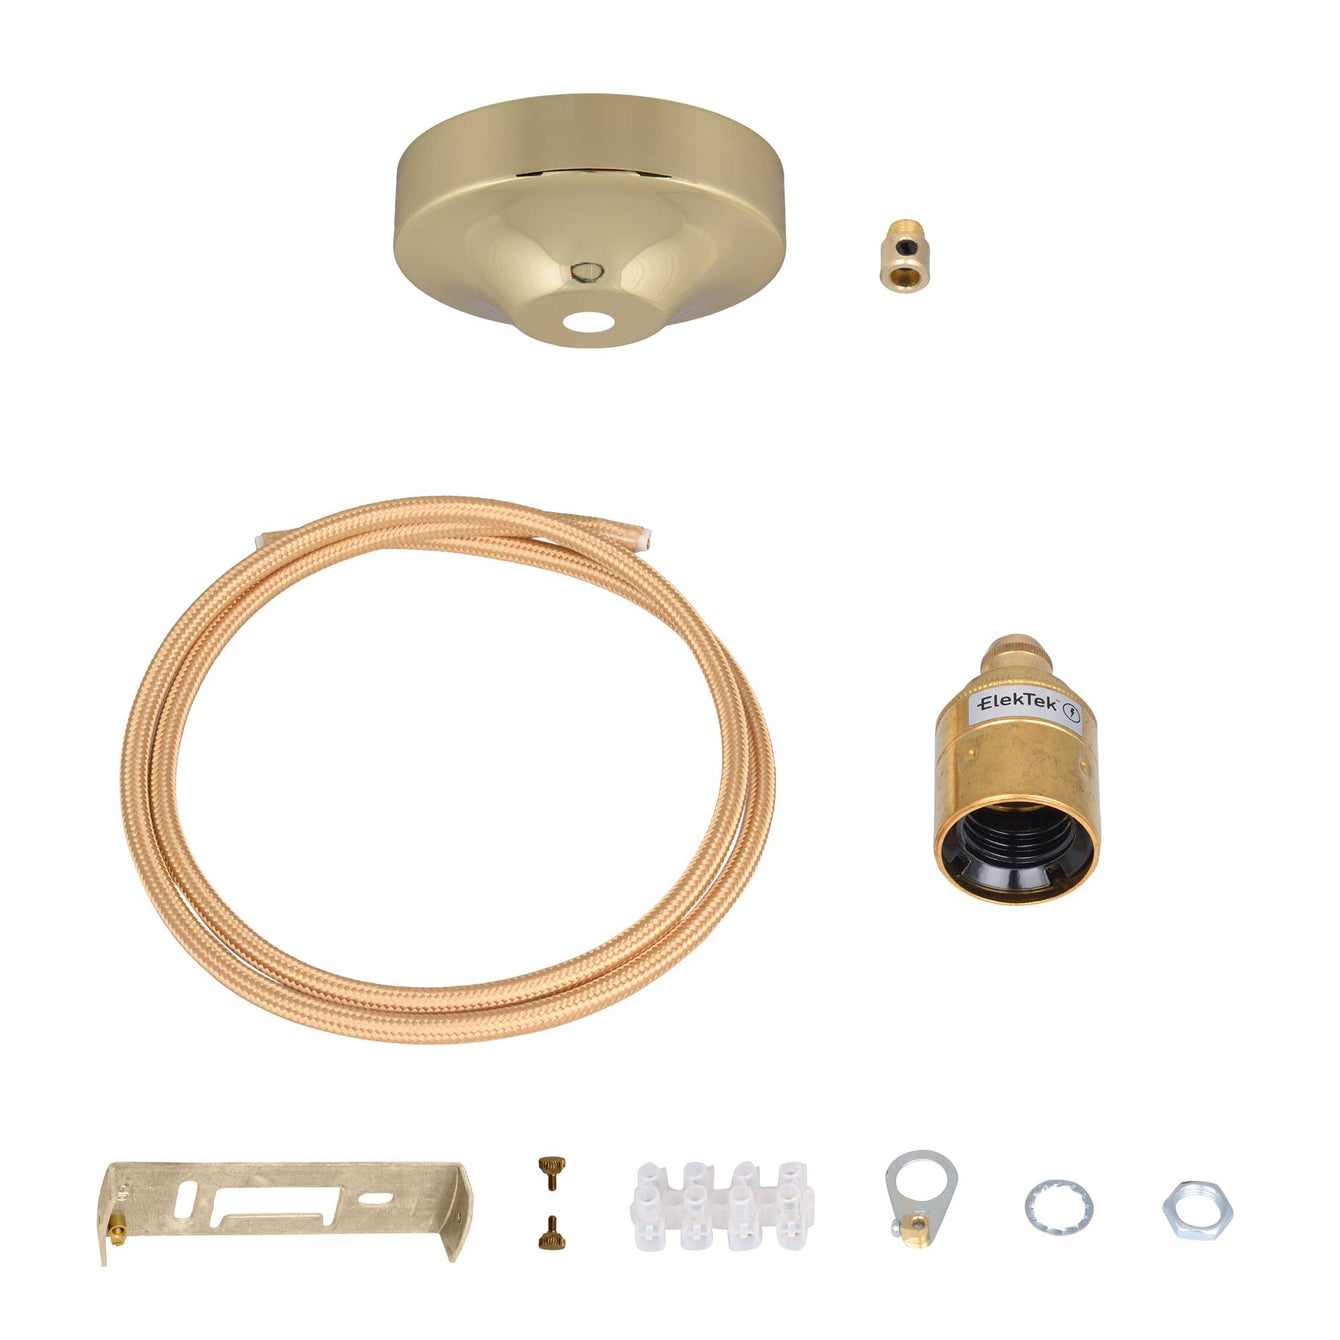 ElekTek Premium Pendant Light Kit DIY 100mm Convex Ceiling Rose, Round Flex and Lamp Holder E27 Plain Cord Grip - Buy It Better Antique Brass